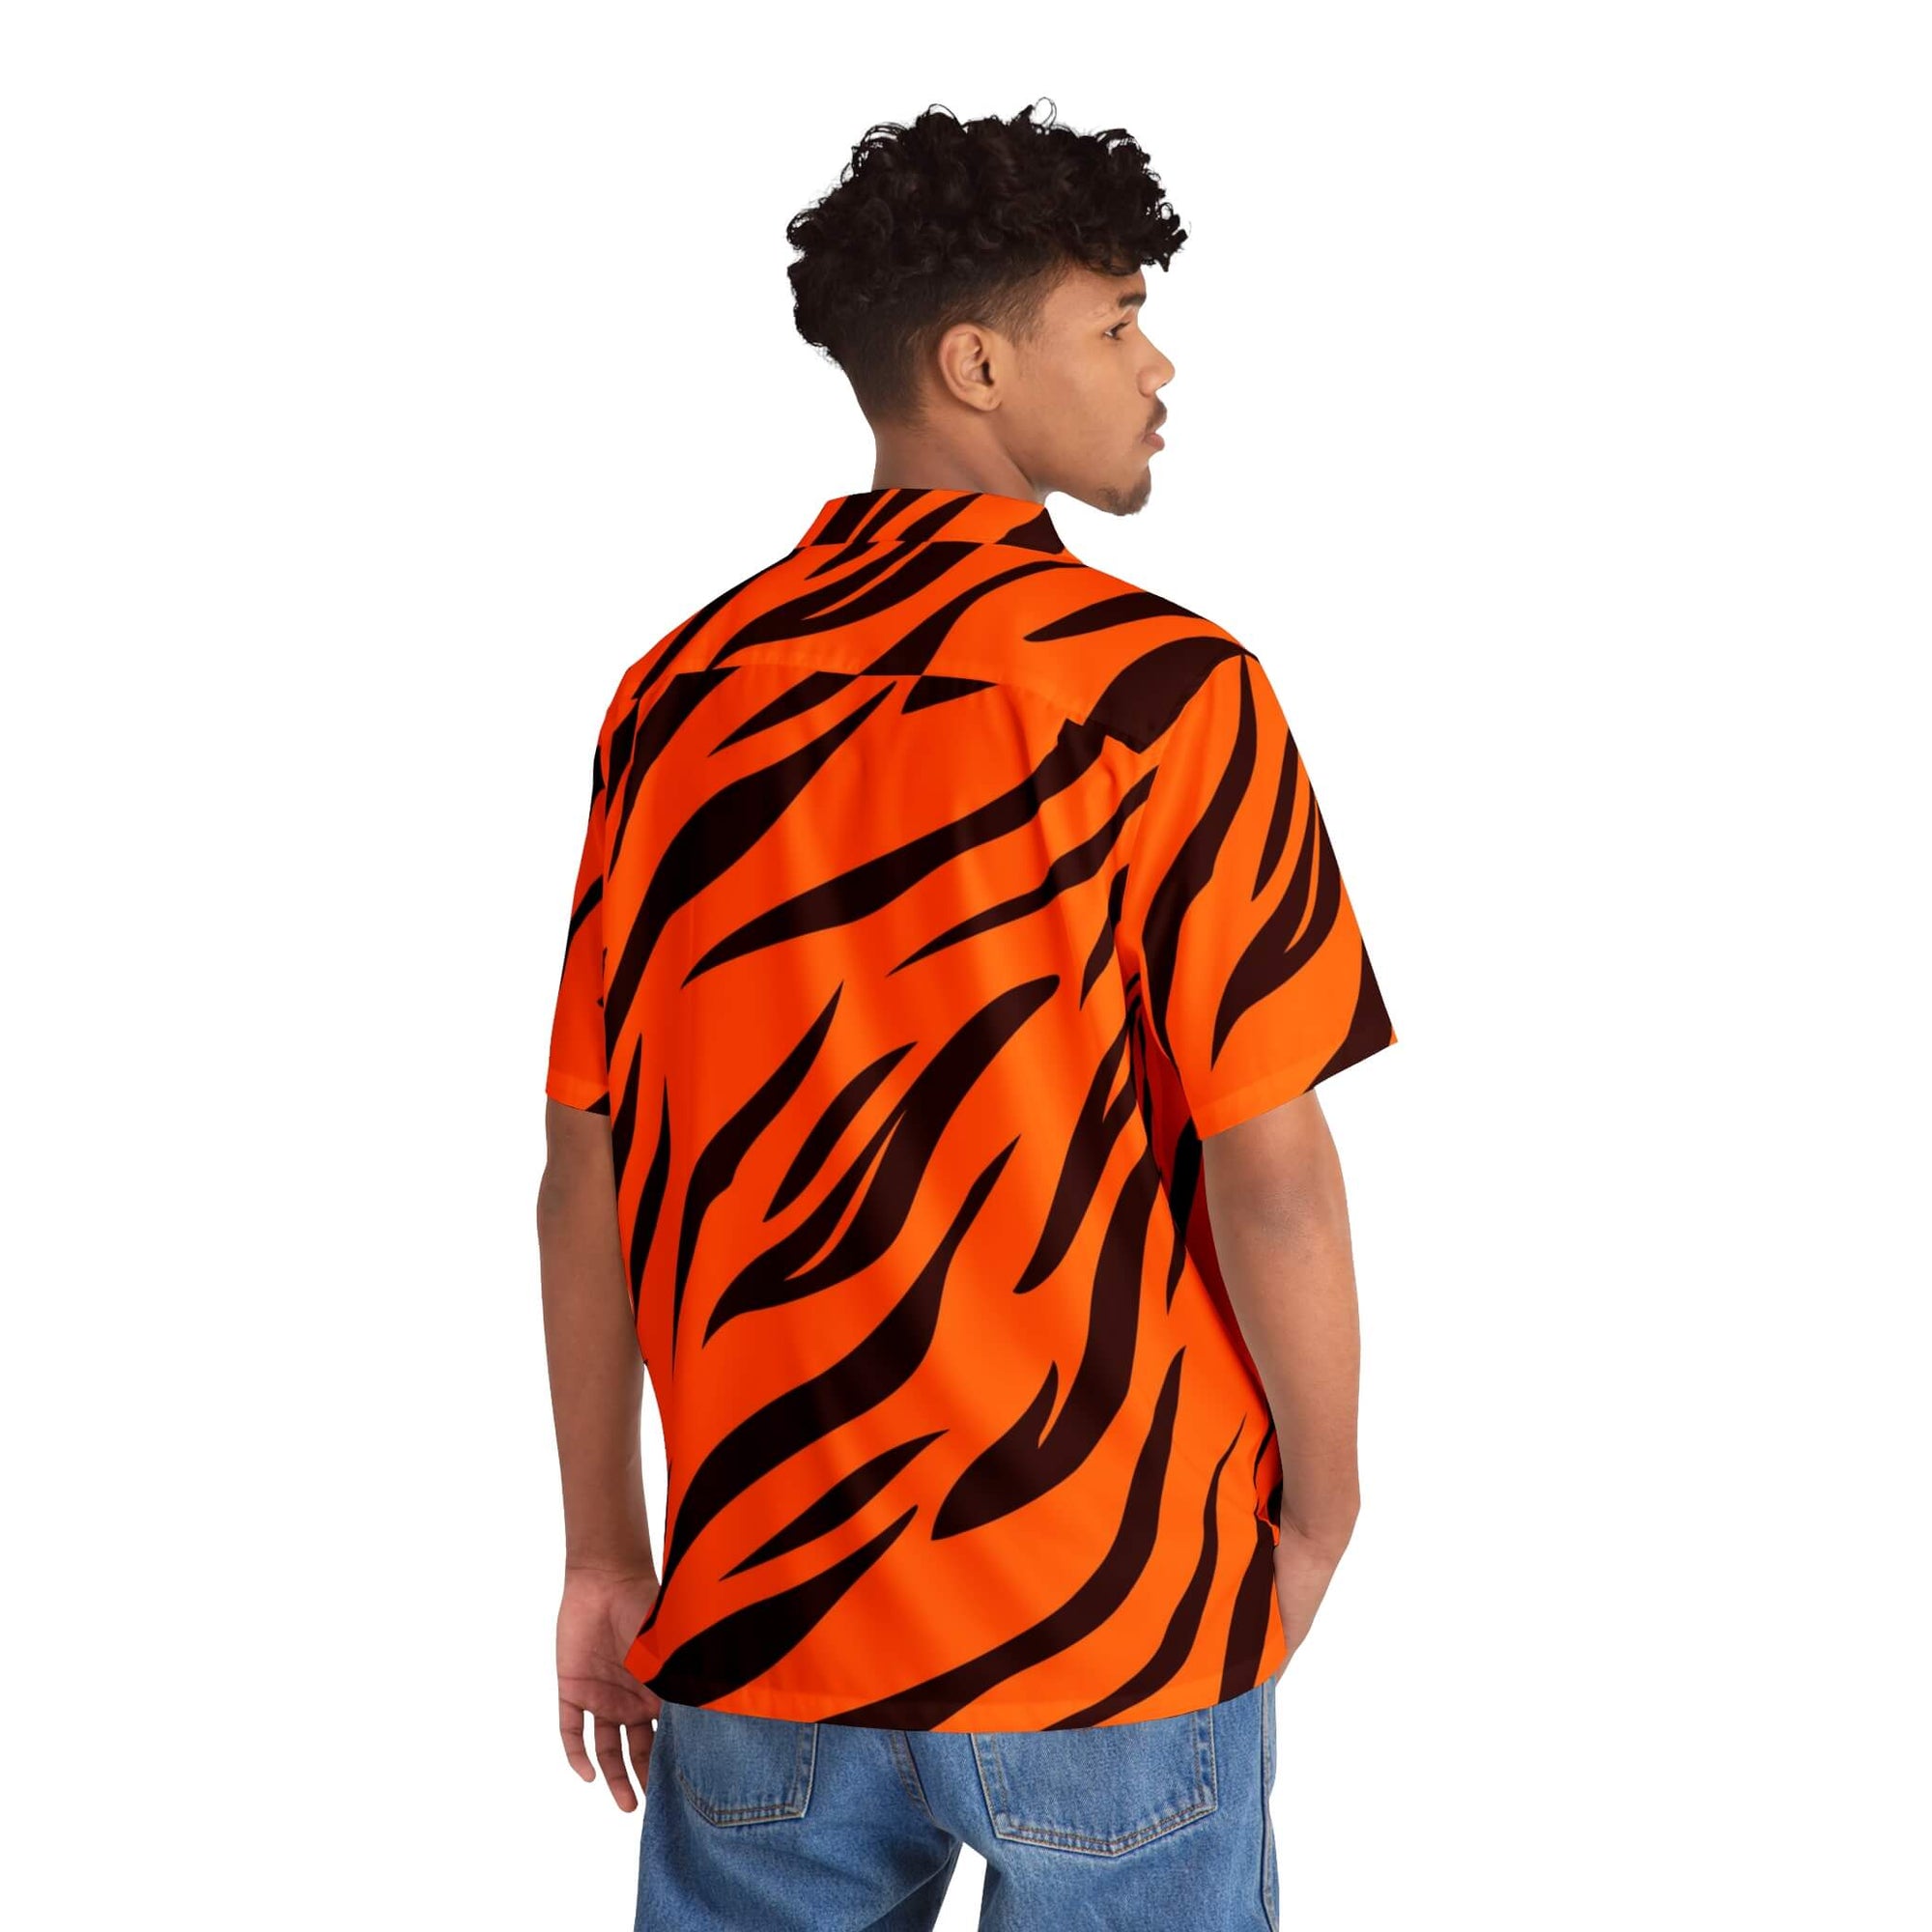 Tiger Skin Pattern Hawaiian Shirt